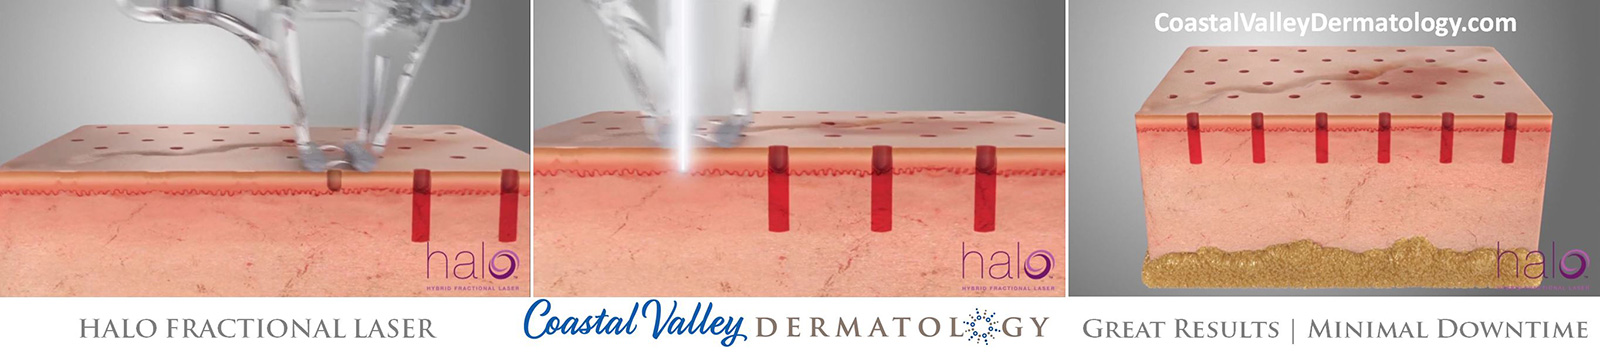 coastal-valley-dermatology-carmel-halo-dual-laser-rejuvenation-photo